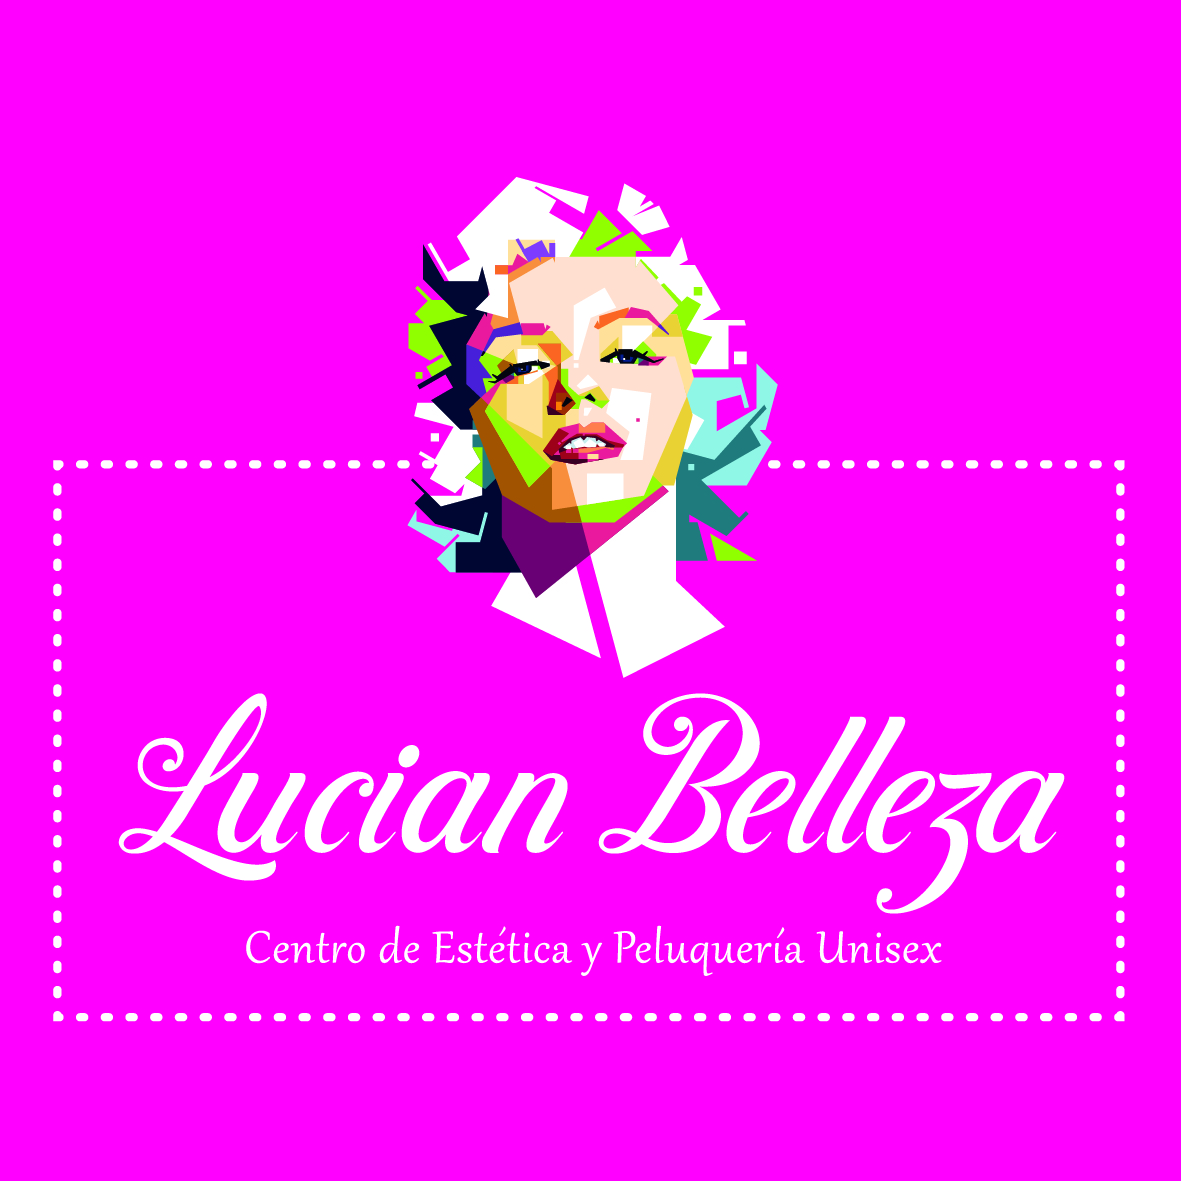 Lucian Belleza